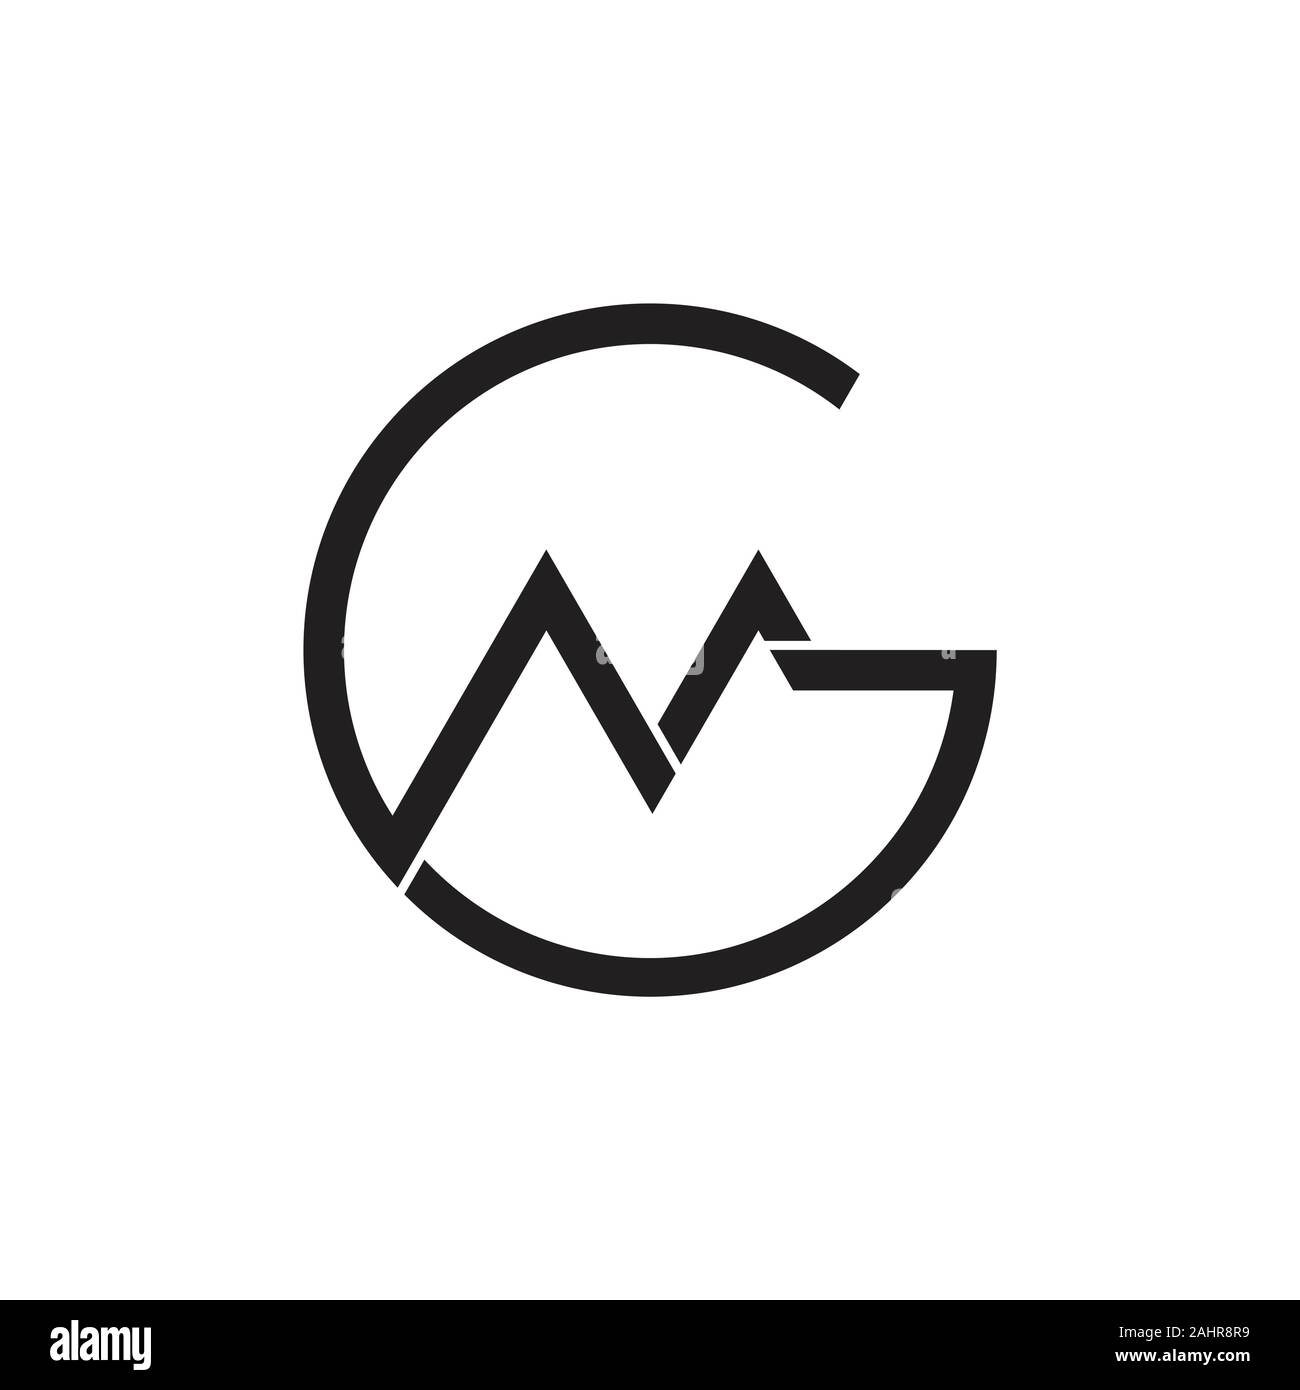 GM Letter Logo Design with Black Smoke., Stock vector